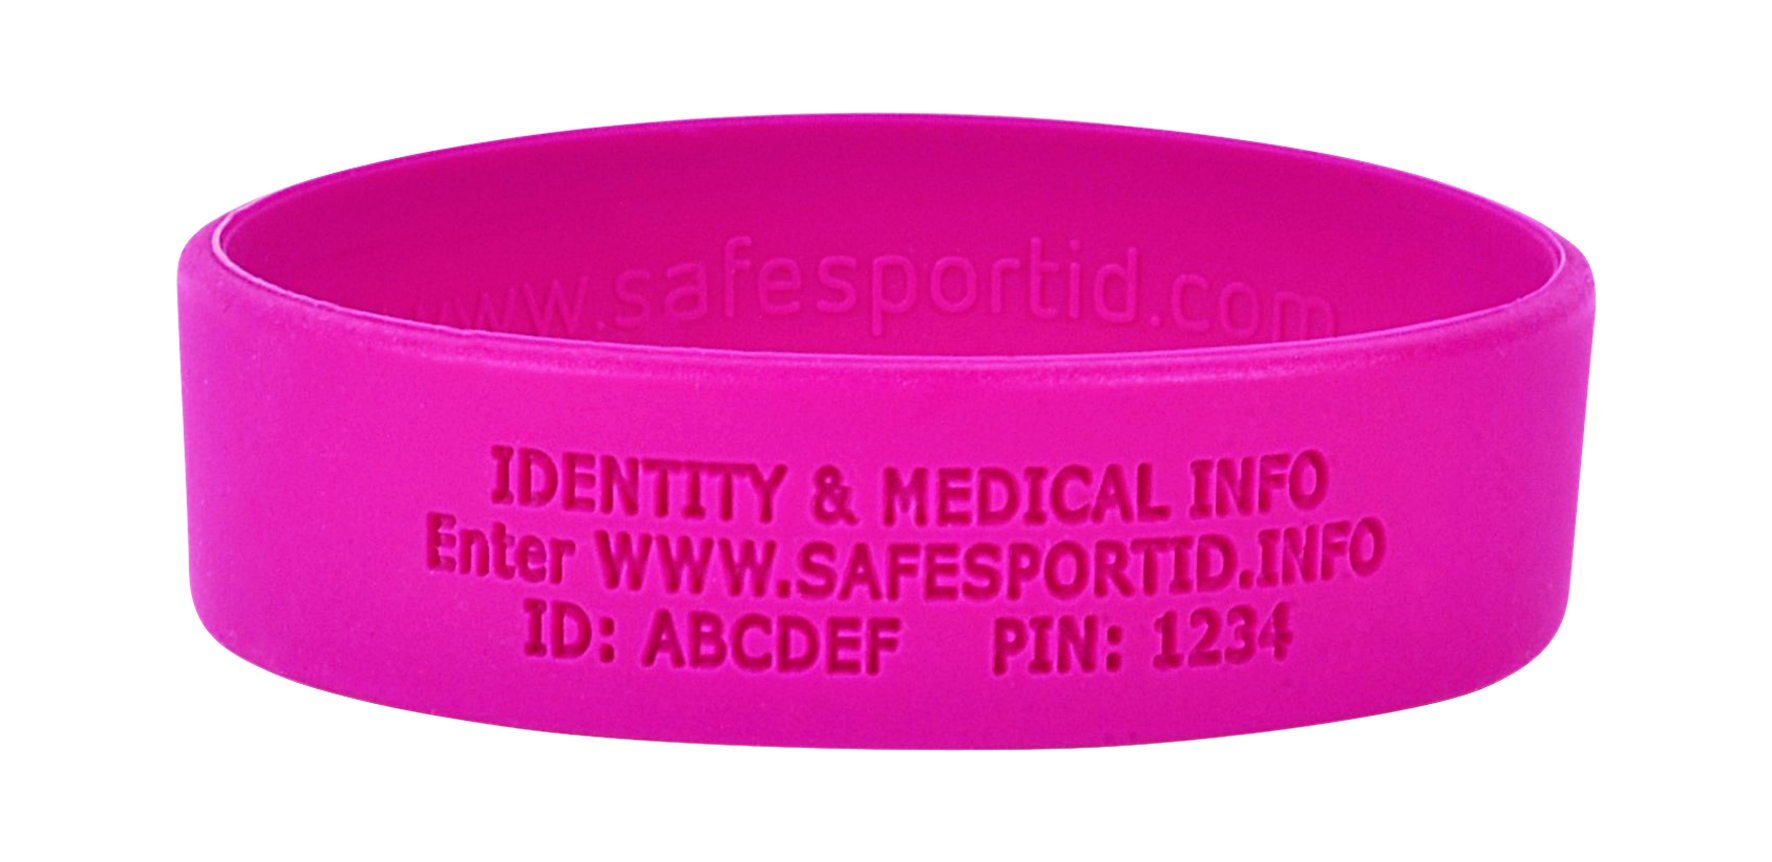 Pulseras identificativas para personas mayores - Safesport ID - SafesportID